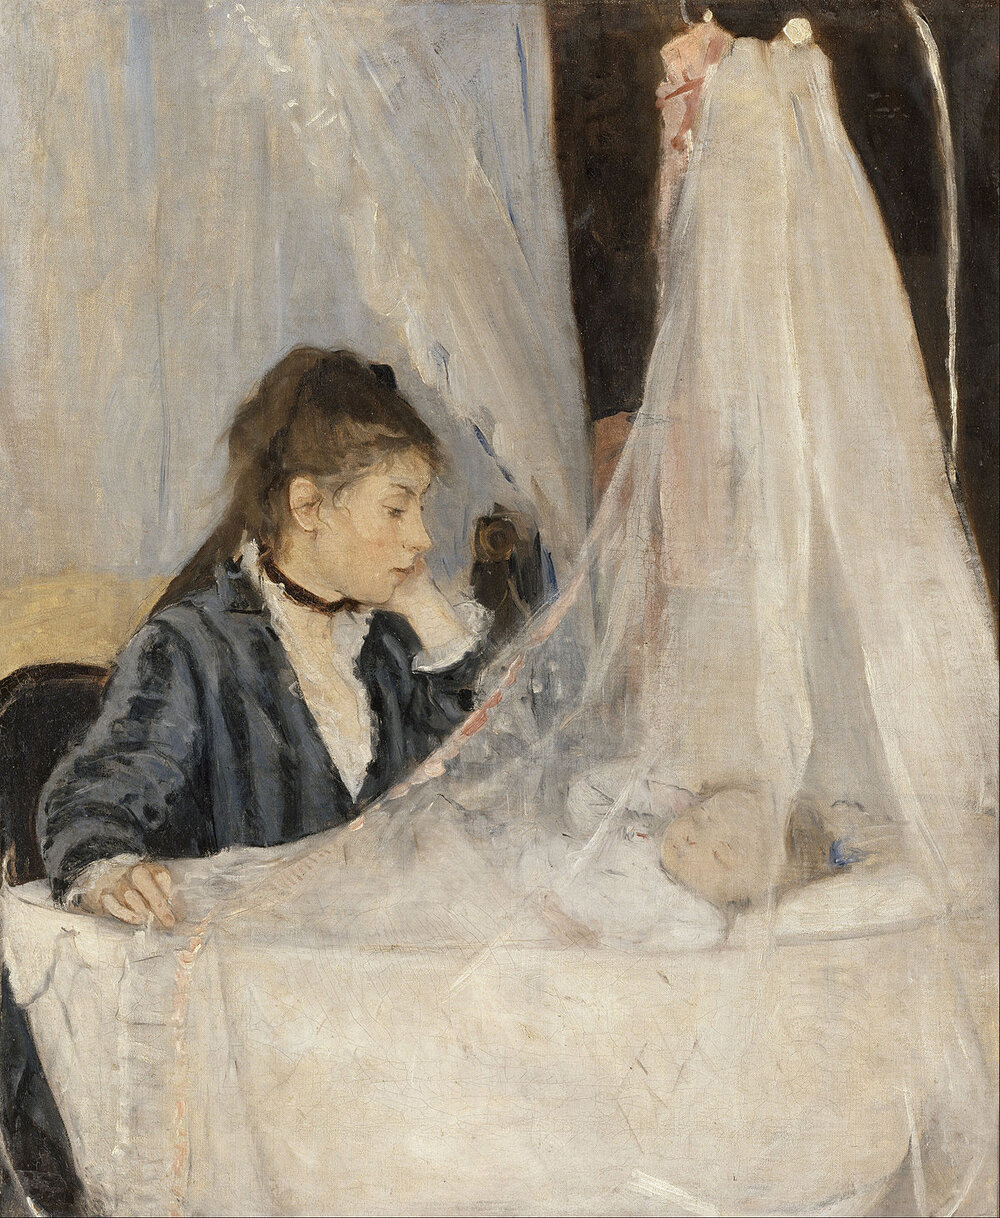 Berthe Morisot, "The Cradle" (1872)